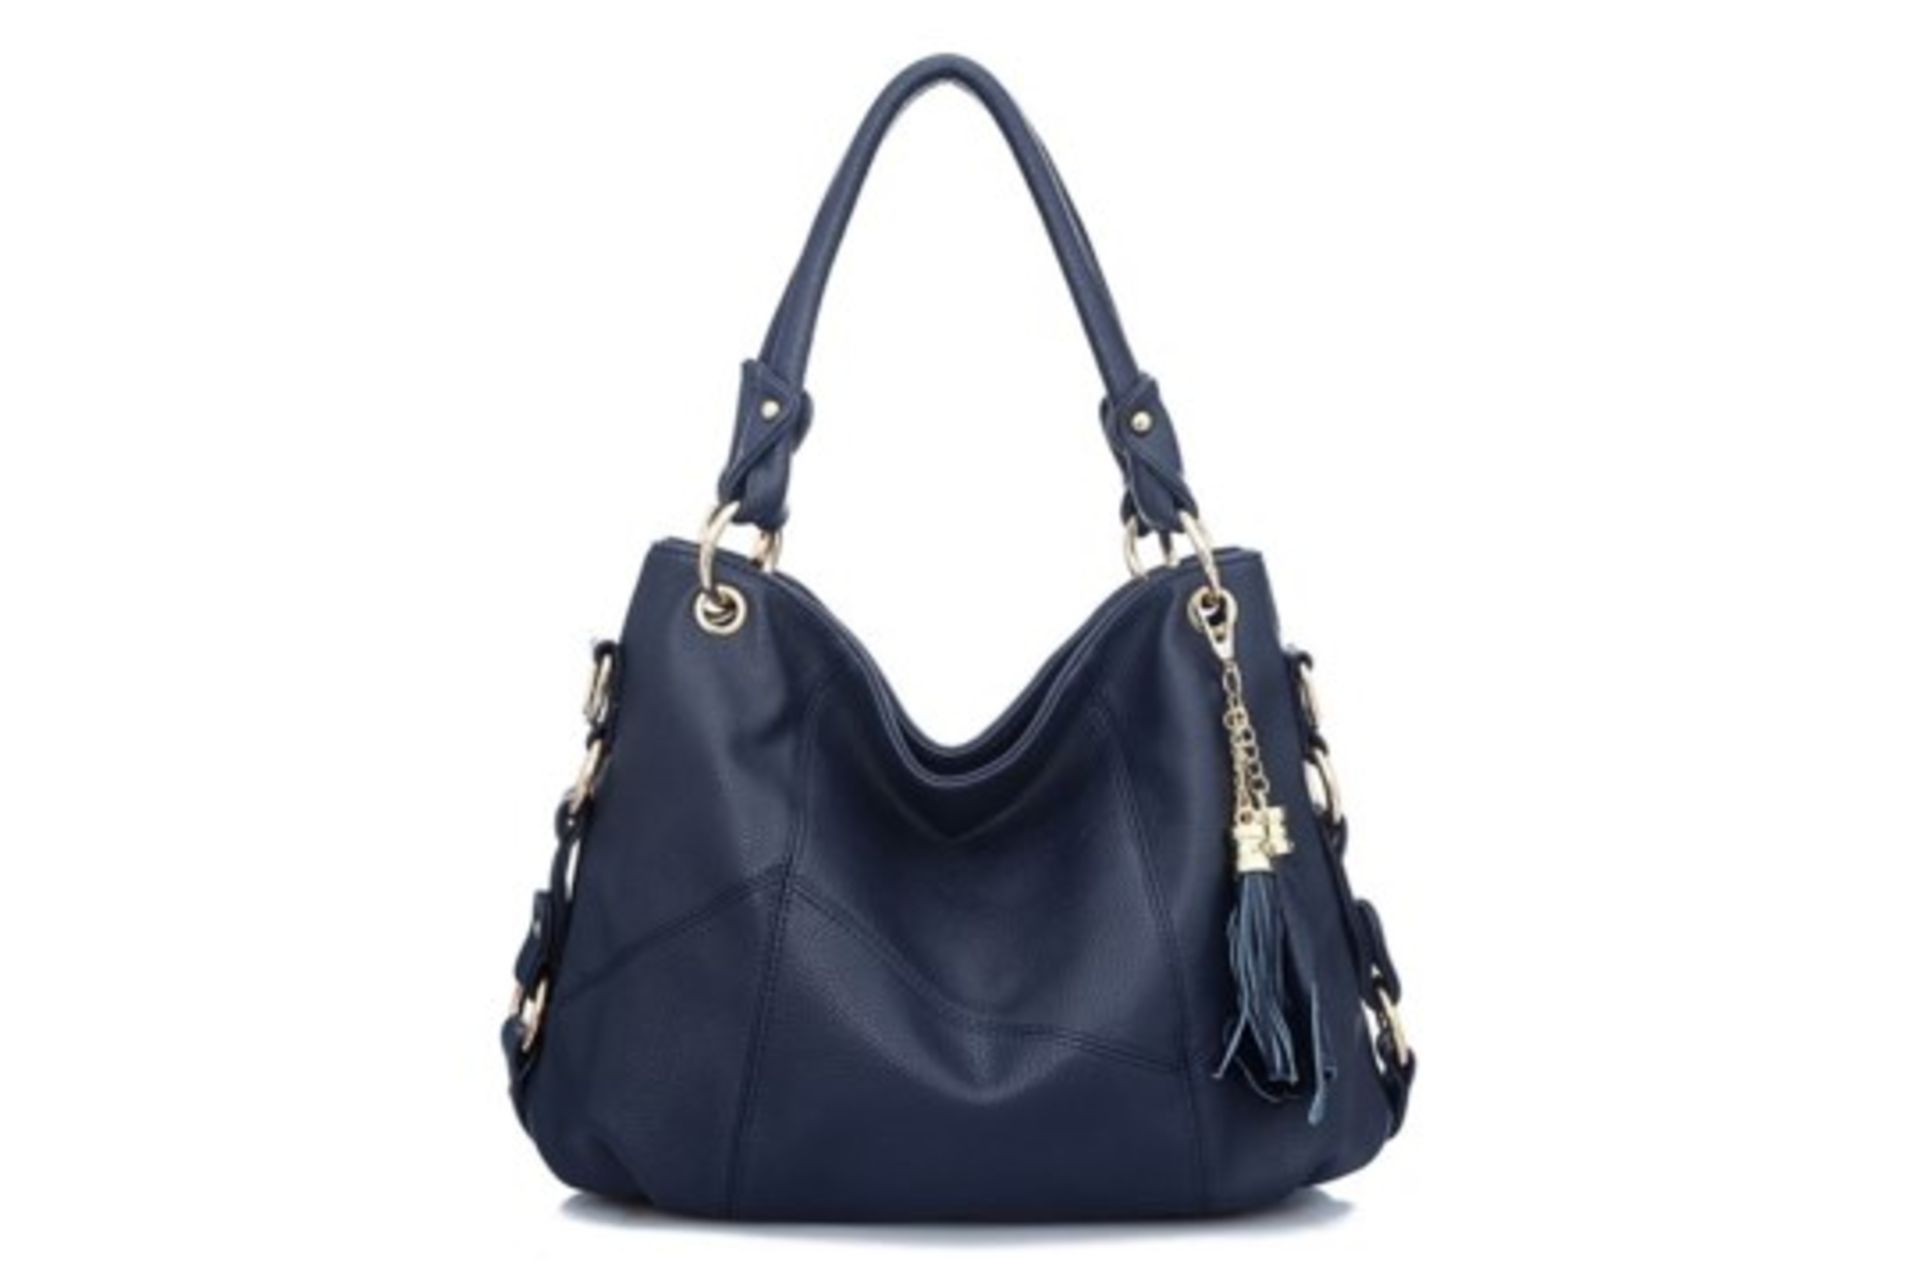 Brand New Womens Coolives Metal Ring Shoulder Strap Bag in Navy Blue RRP £44.99